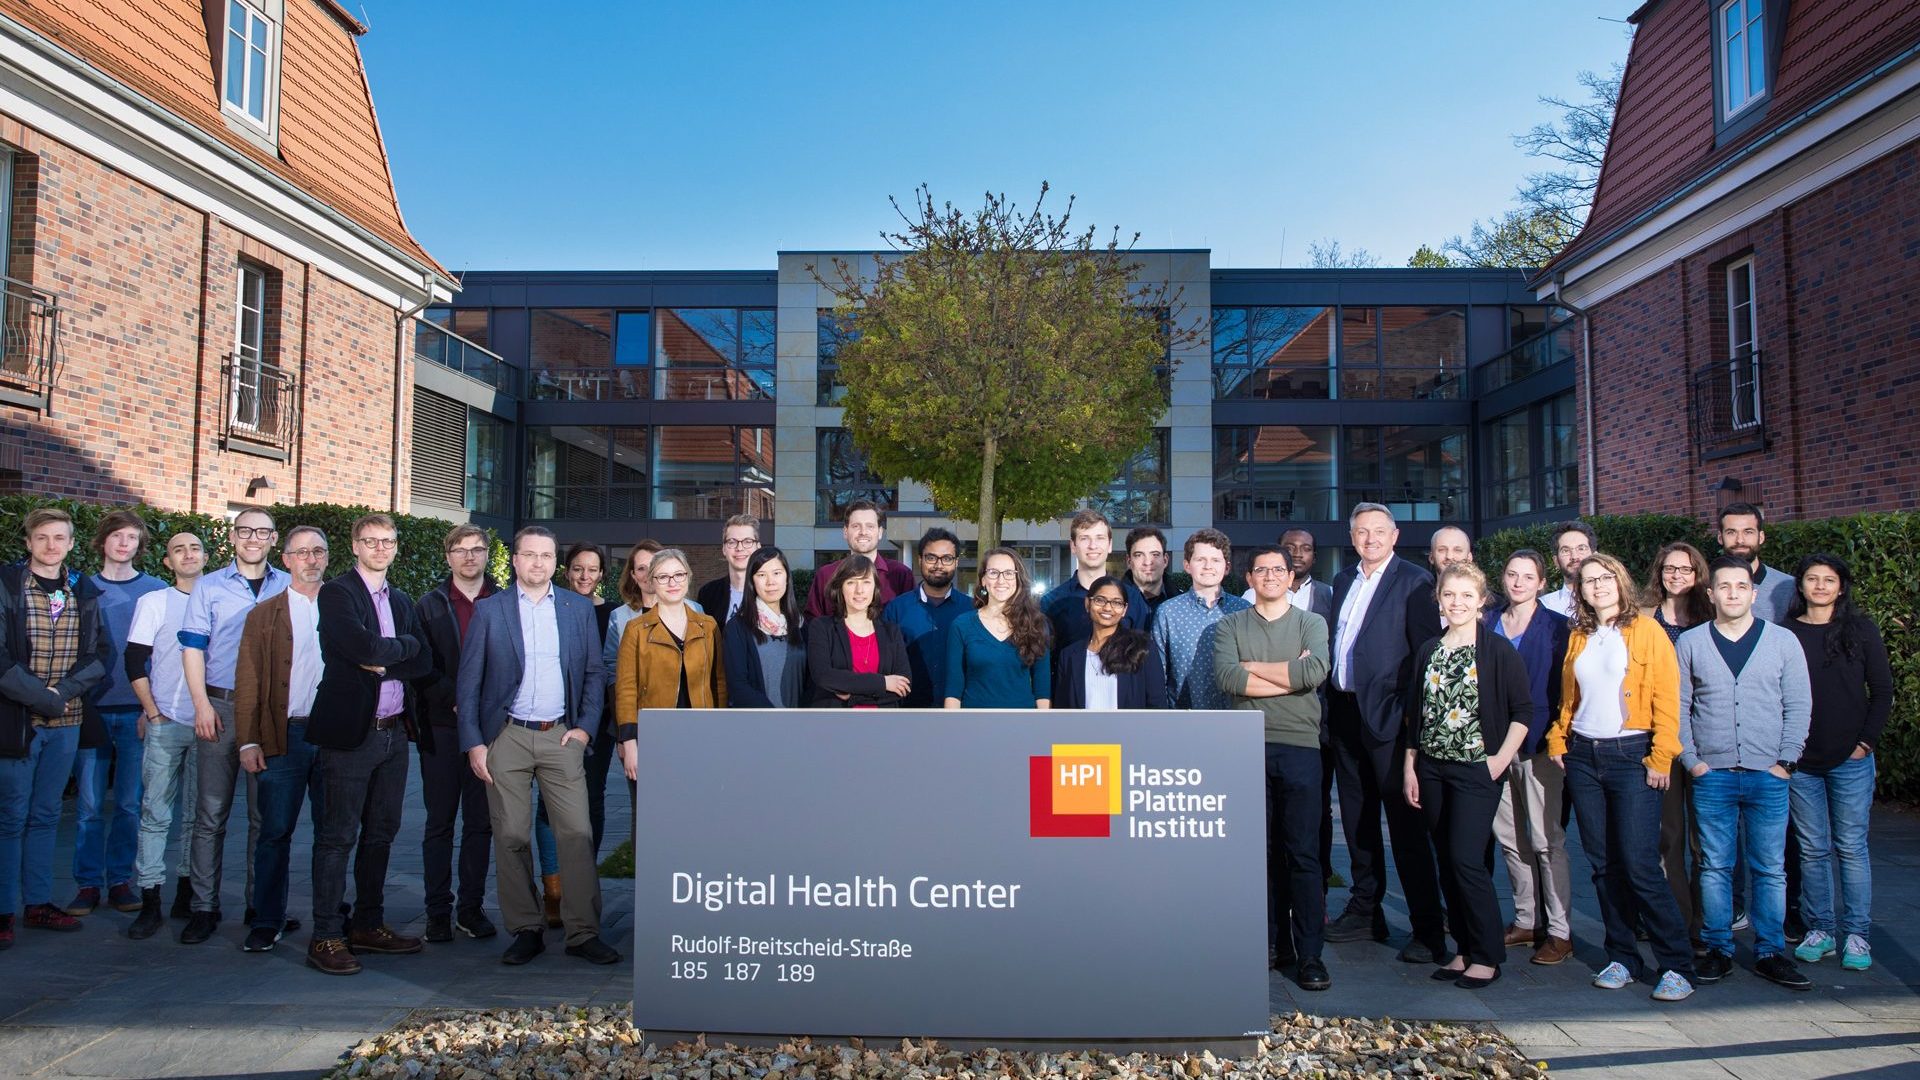 Digital Health Team, February 2020